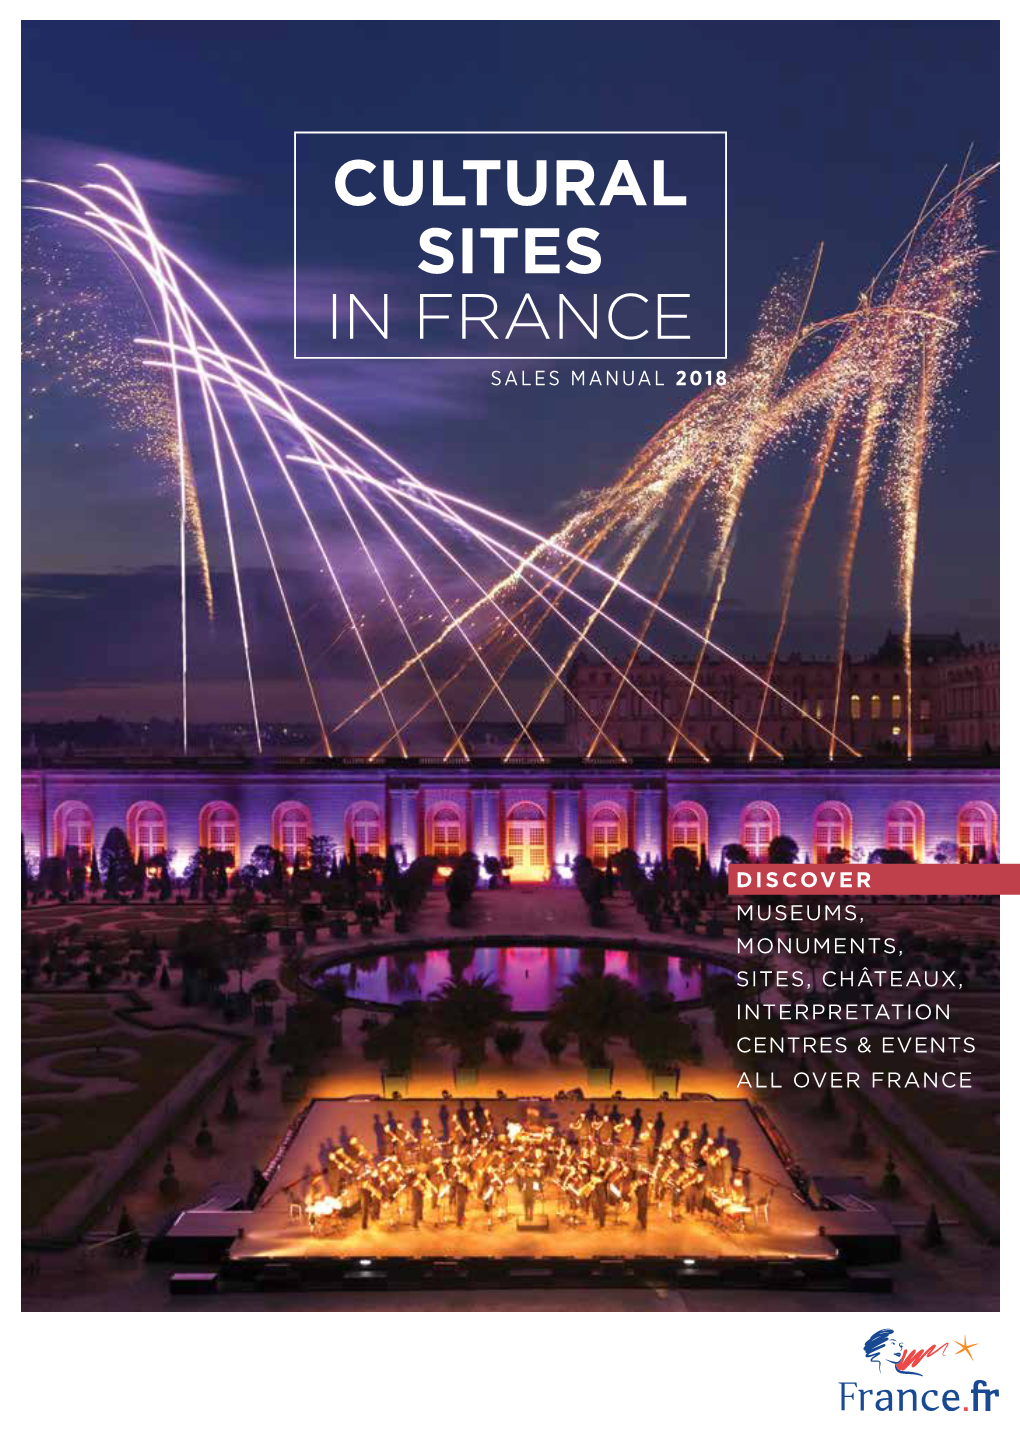 Cultural Sites in France Sales Manual 2018